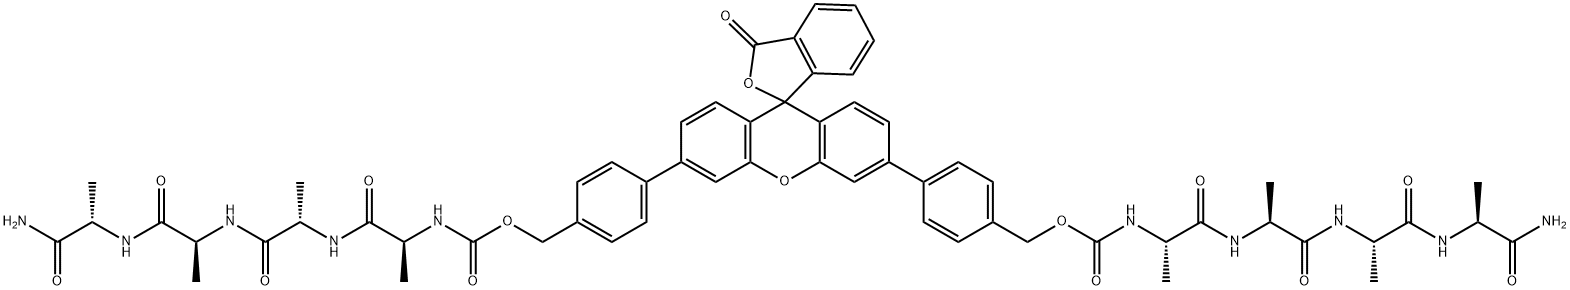 bis(N-benzyloxycarbonyltetraalanyl)rhodamine|bis(N-benzyloxycarbonyltetraalanyl)rhodamine